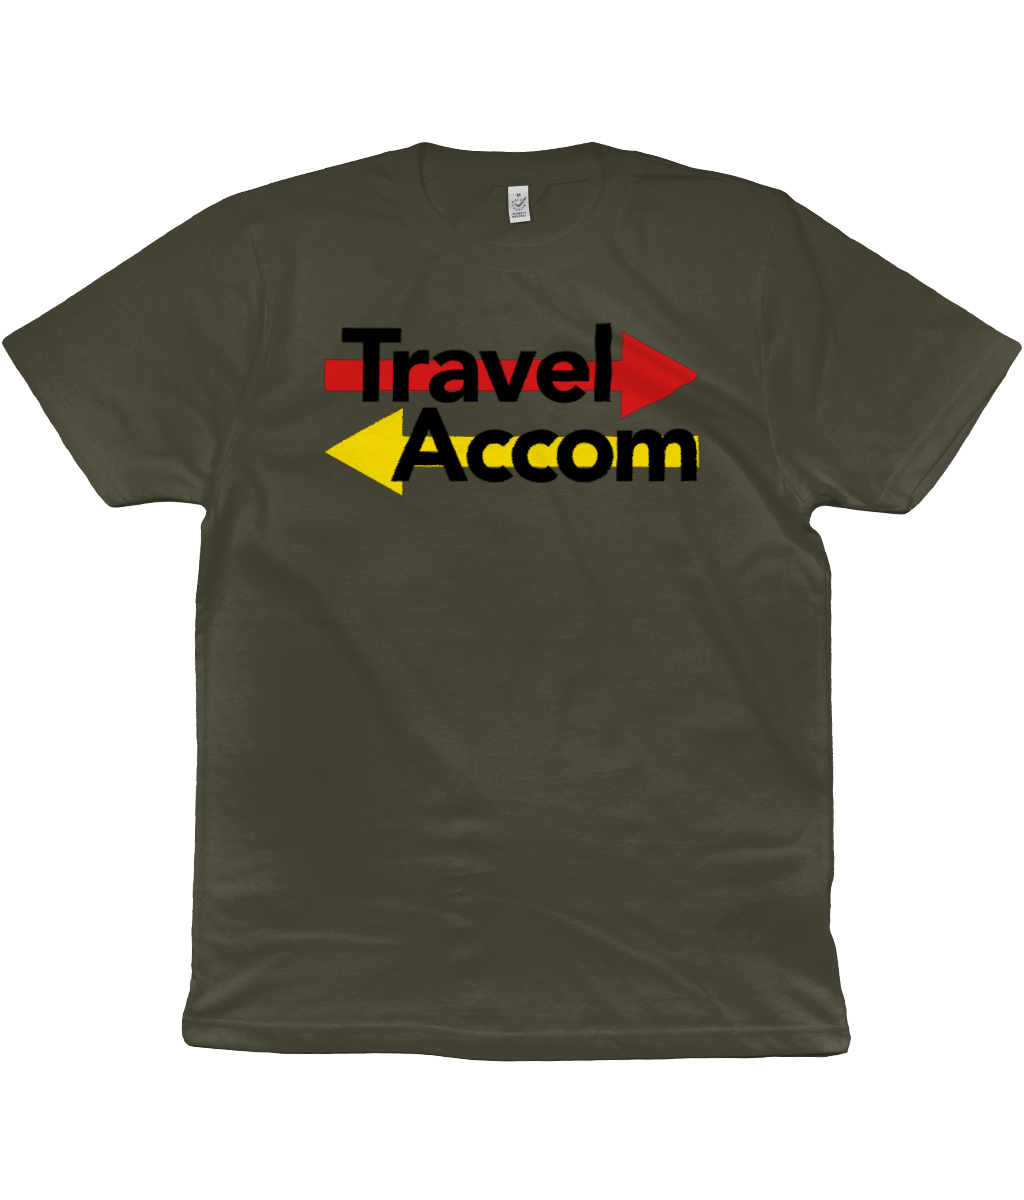 Travel/Accom Organic Cotton T-Shirt